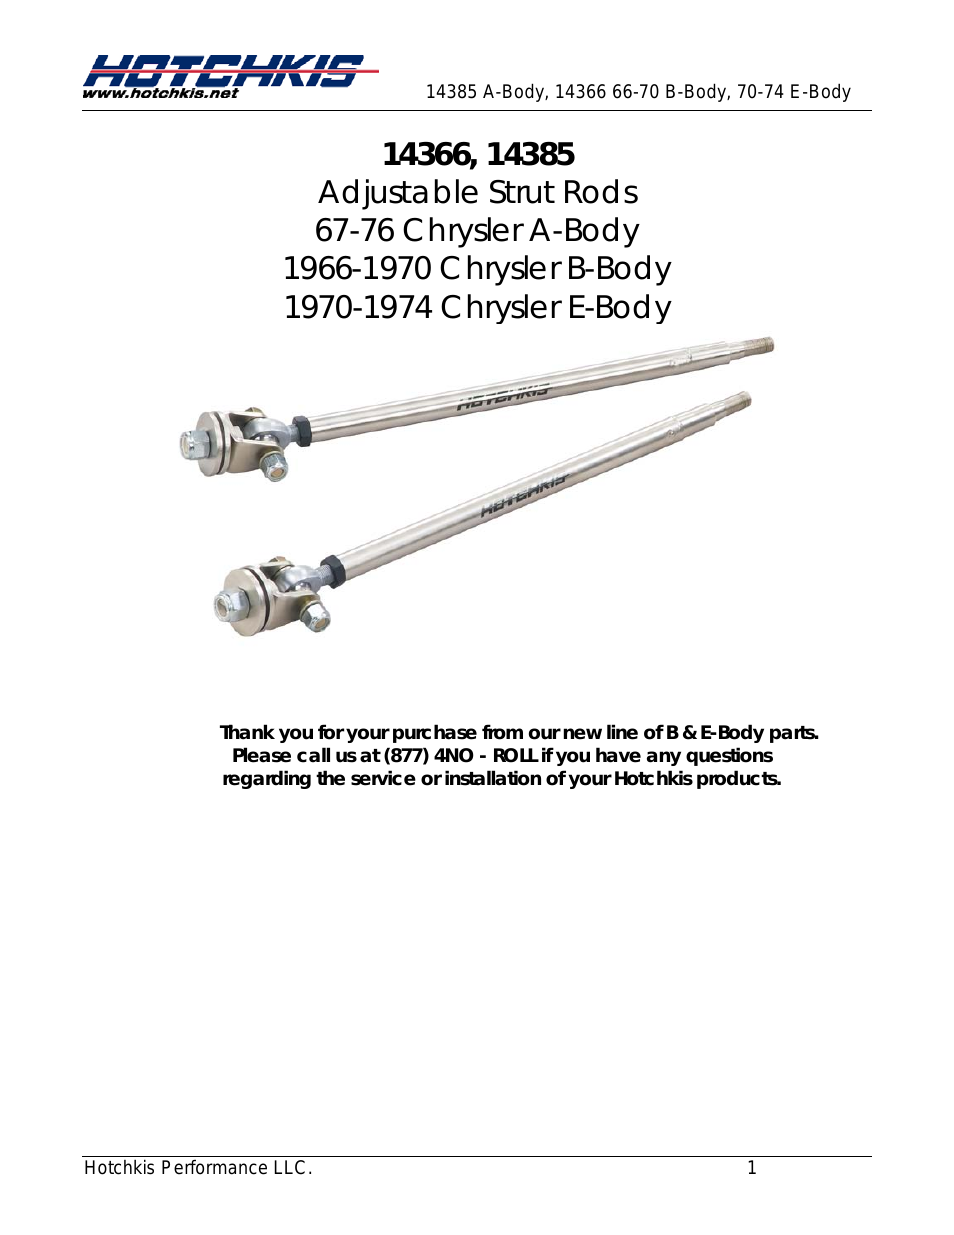 14366 Strut Rods, Adjustable, Dodge B&E Body